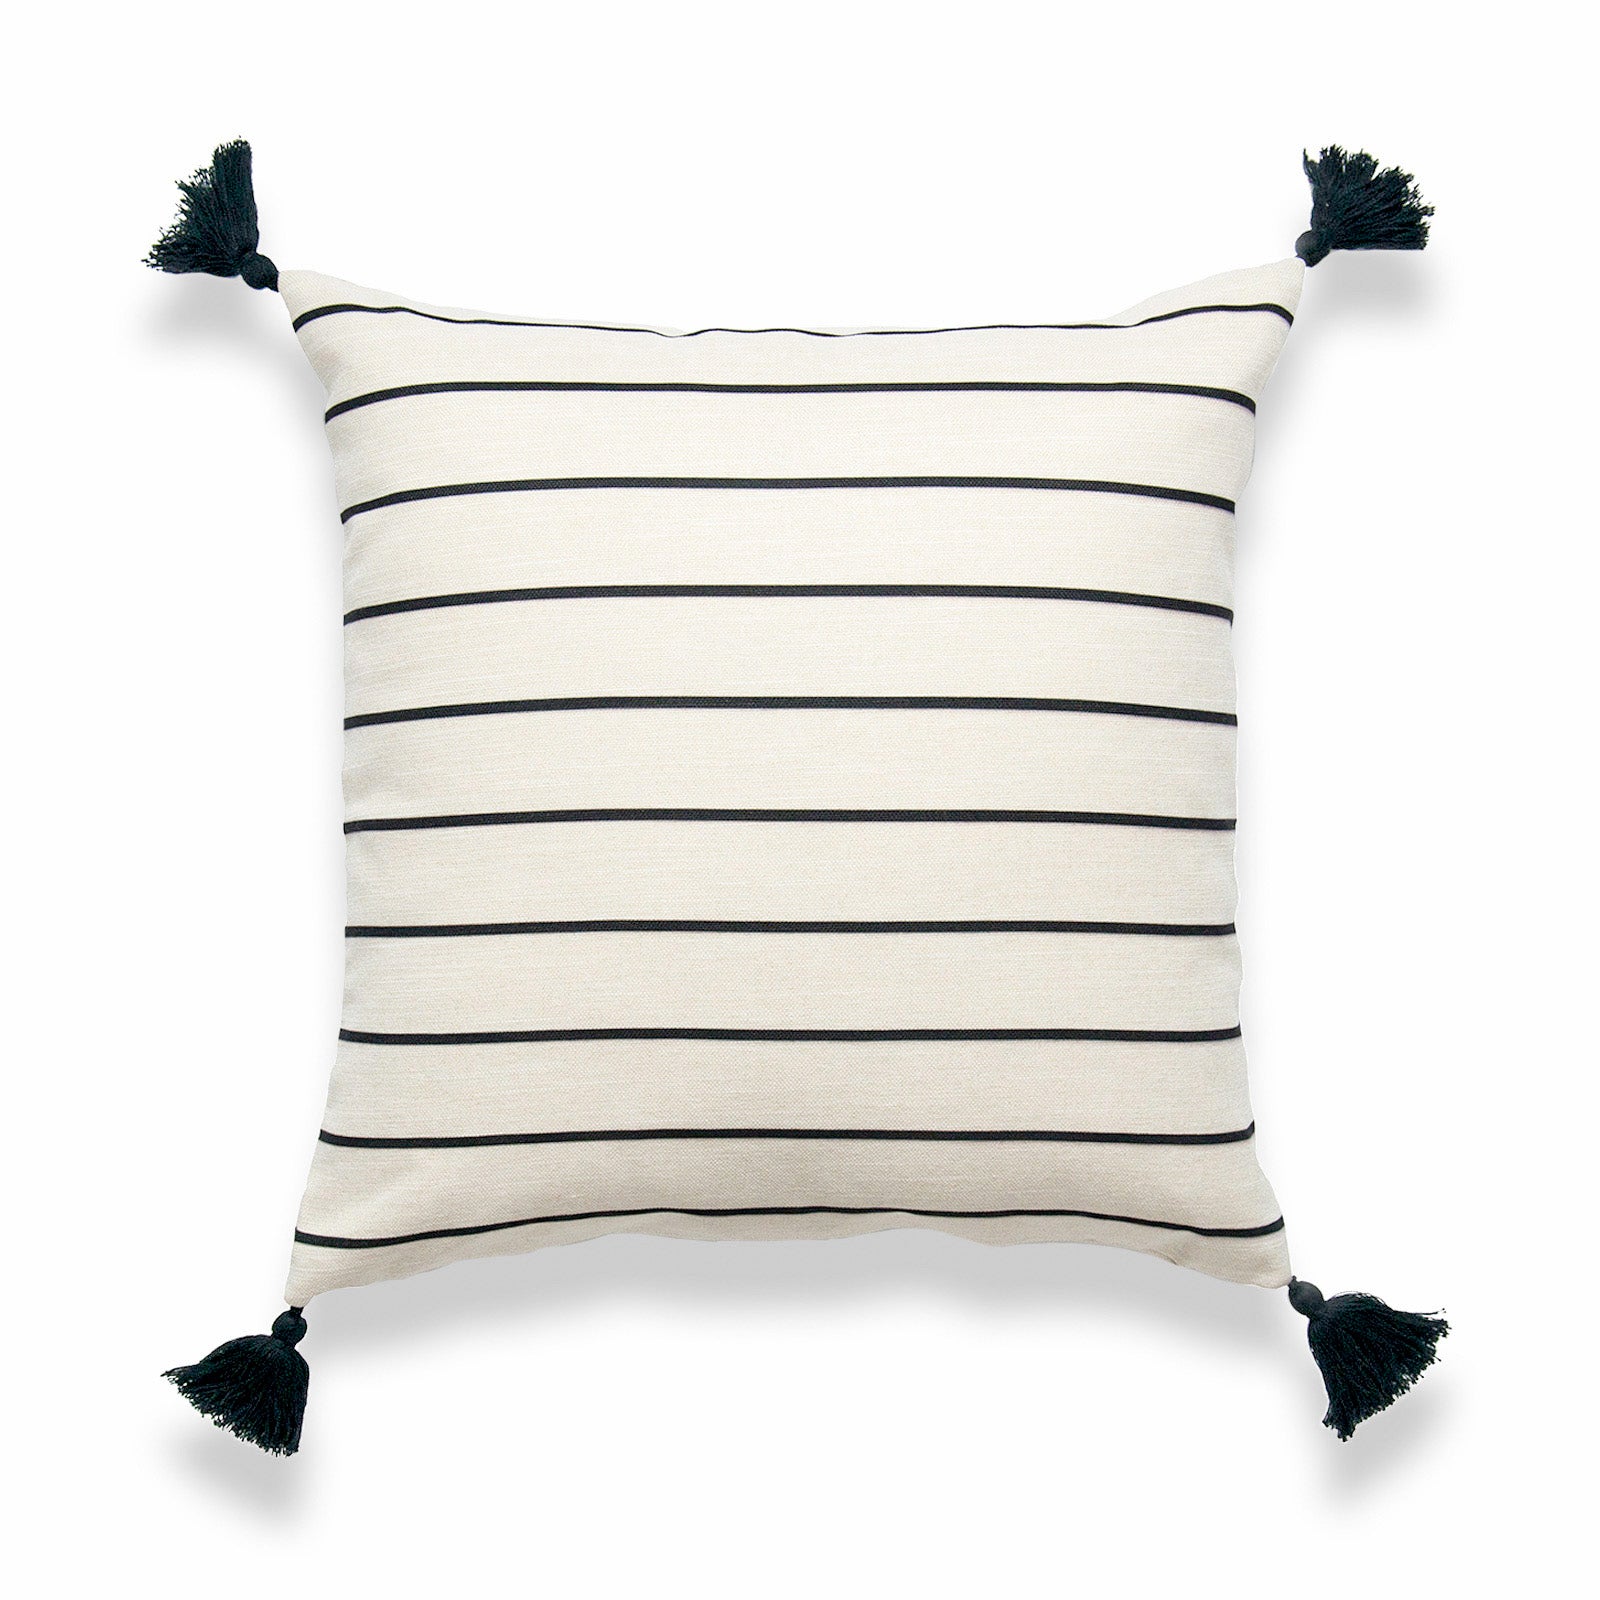 Moroccan Tassel Neutral Pillow Cover, Striped, Beige Balck, 18"x18"